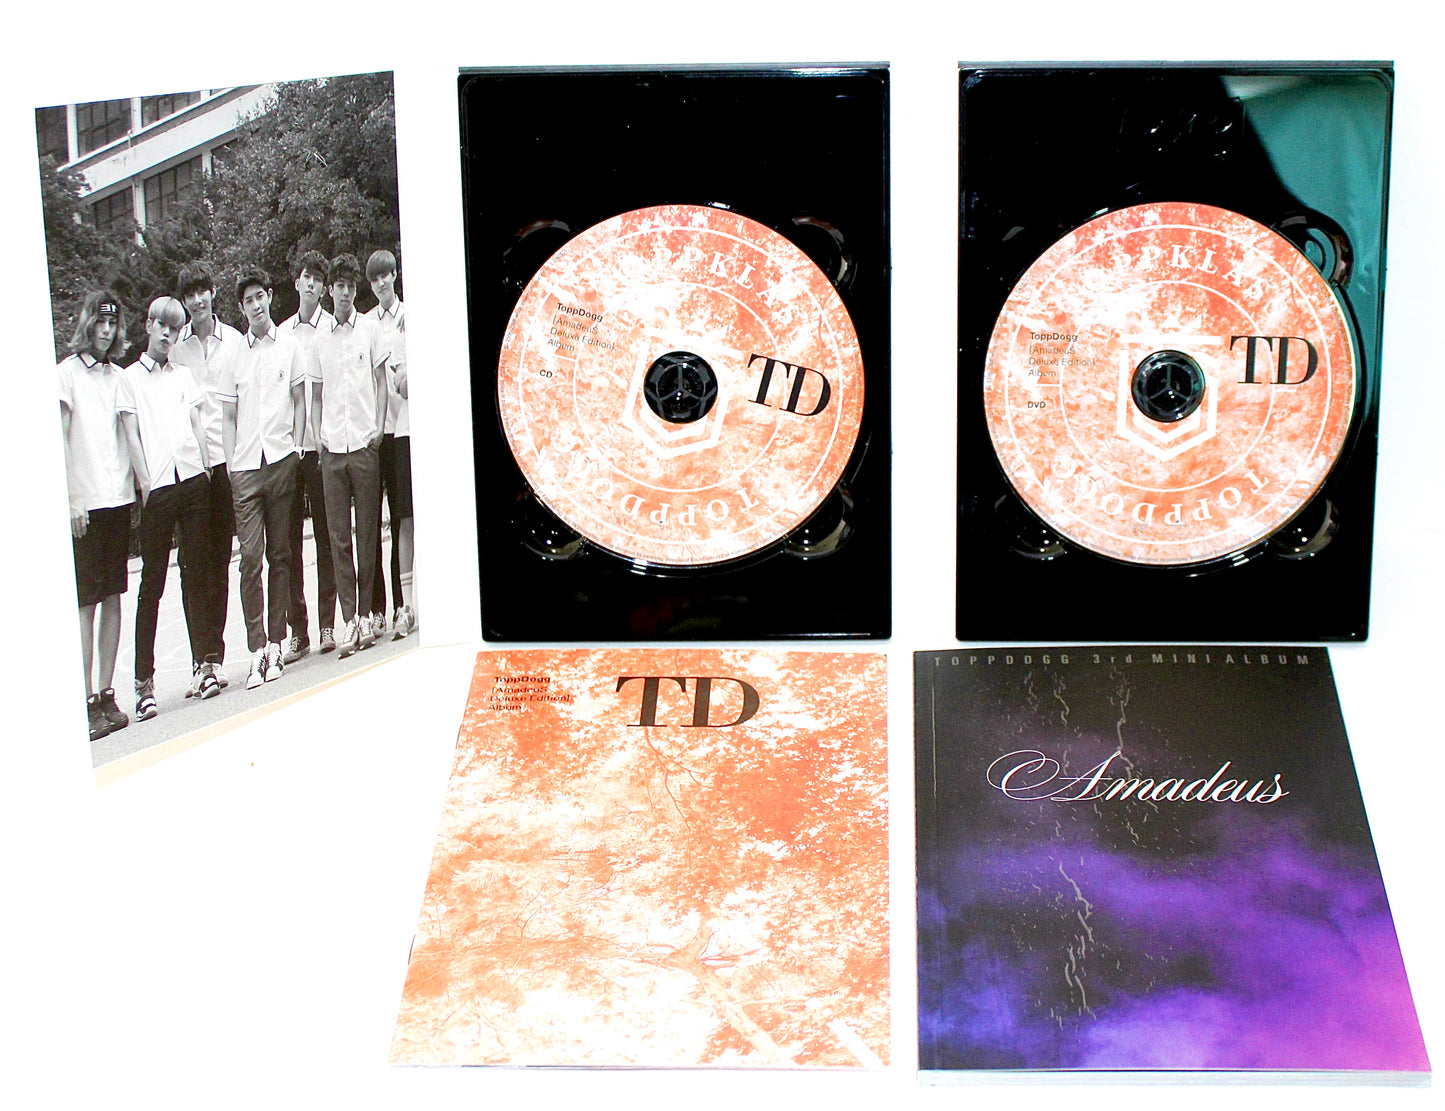 TOPPDOGG 3rd Mini Album: AmadeuS Deluxe Edition